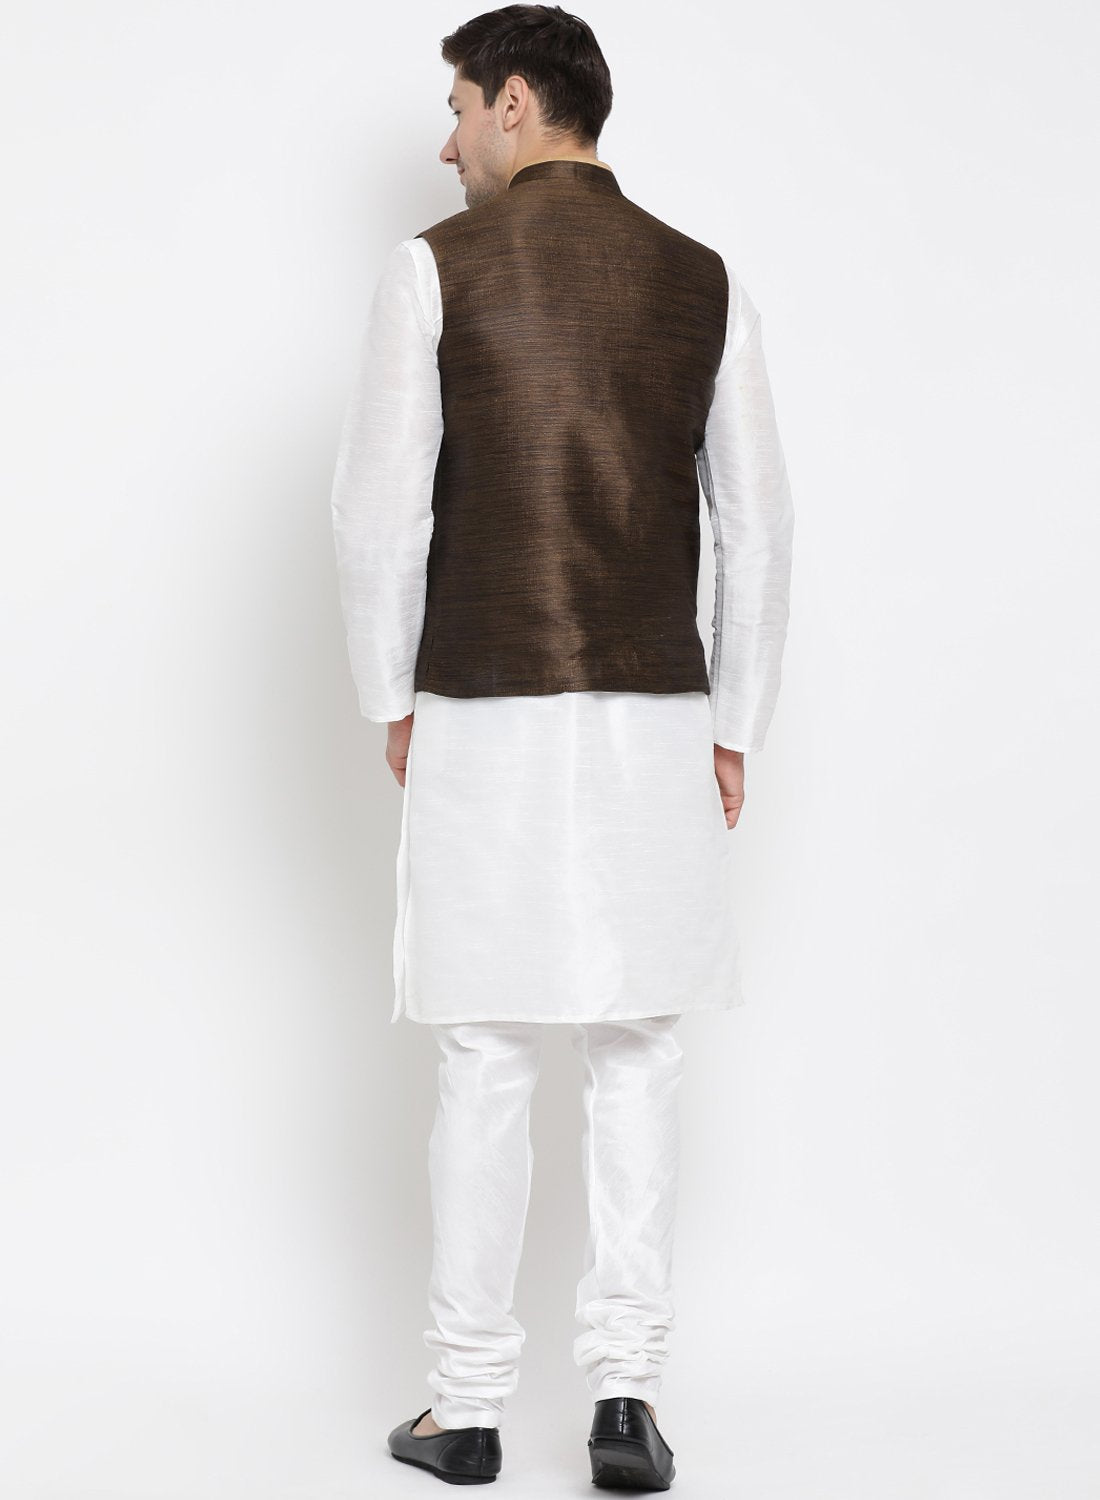 Men's White Cotton Silk Blend Kurta, Ethnic Jacket and Pyjama Set